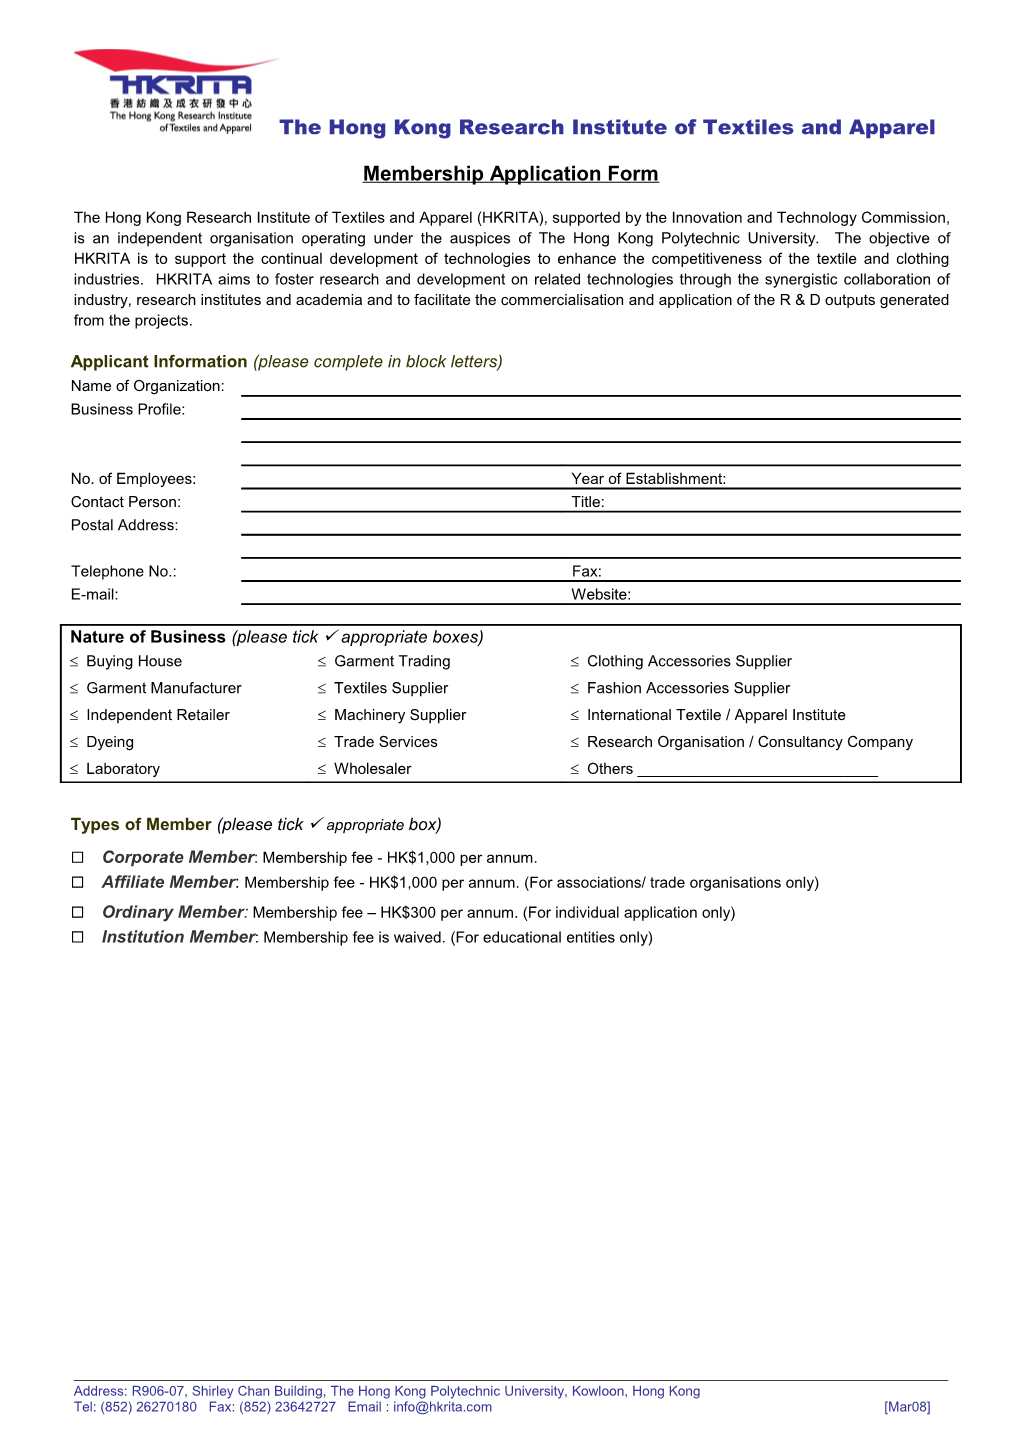 Corporate Membership Application